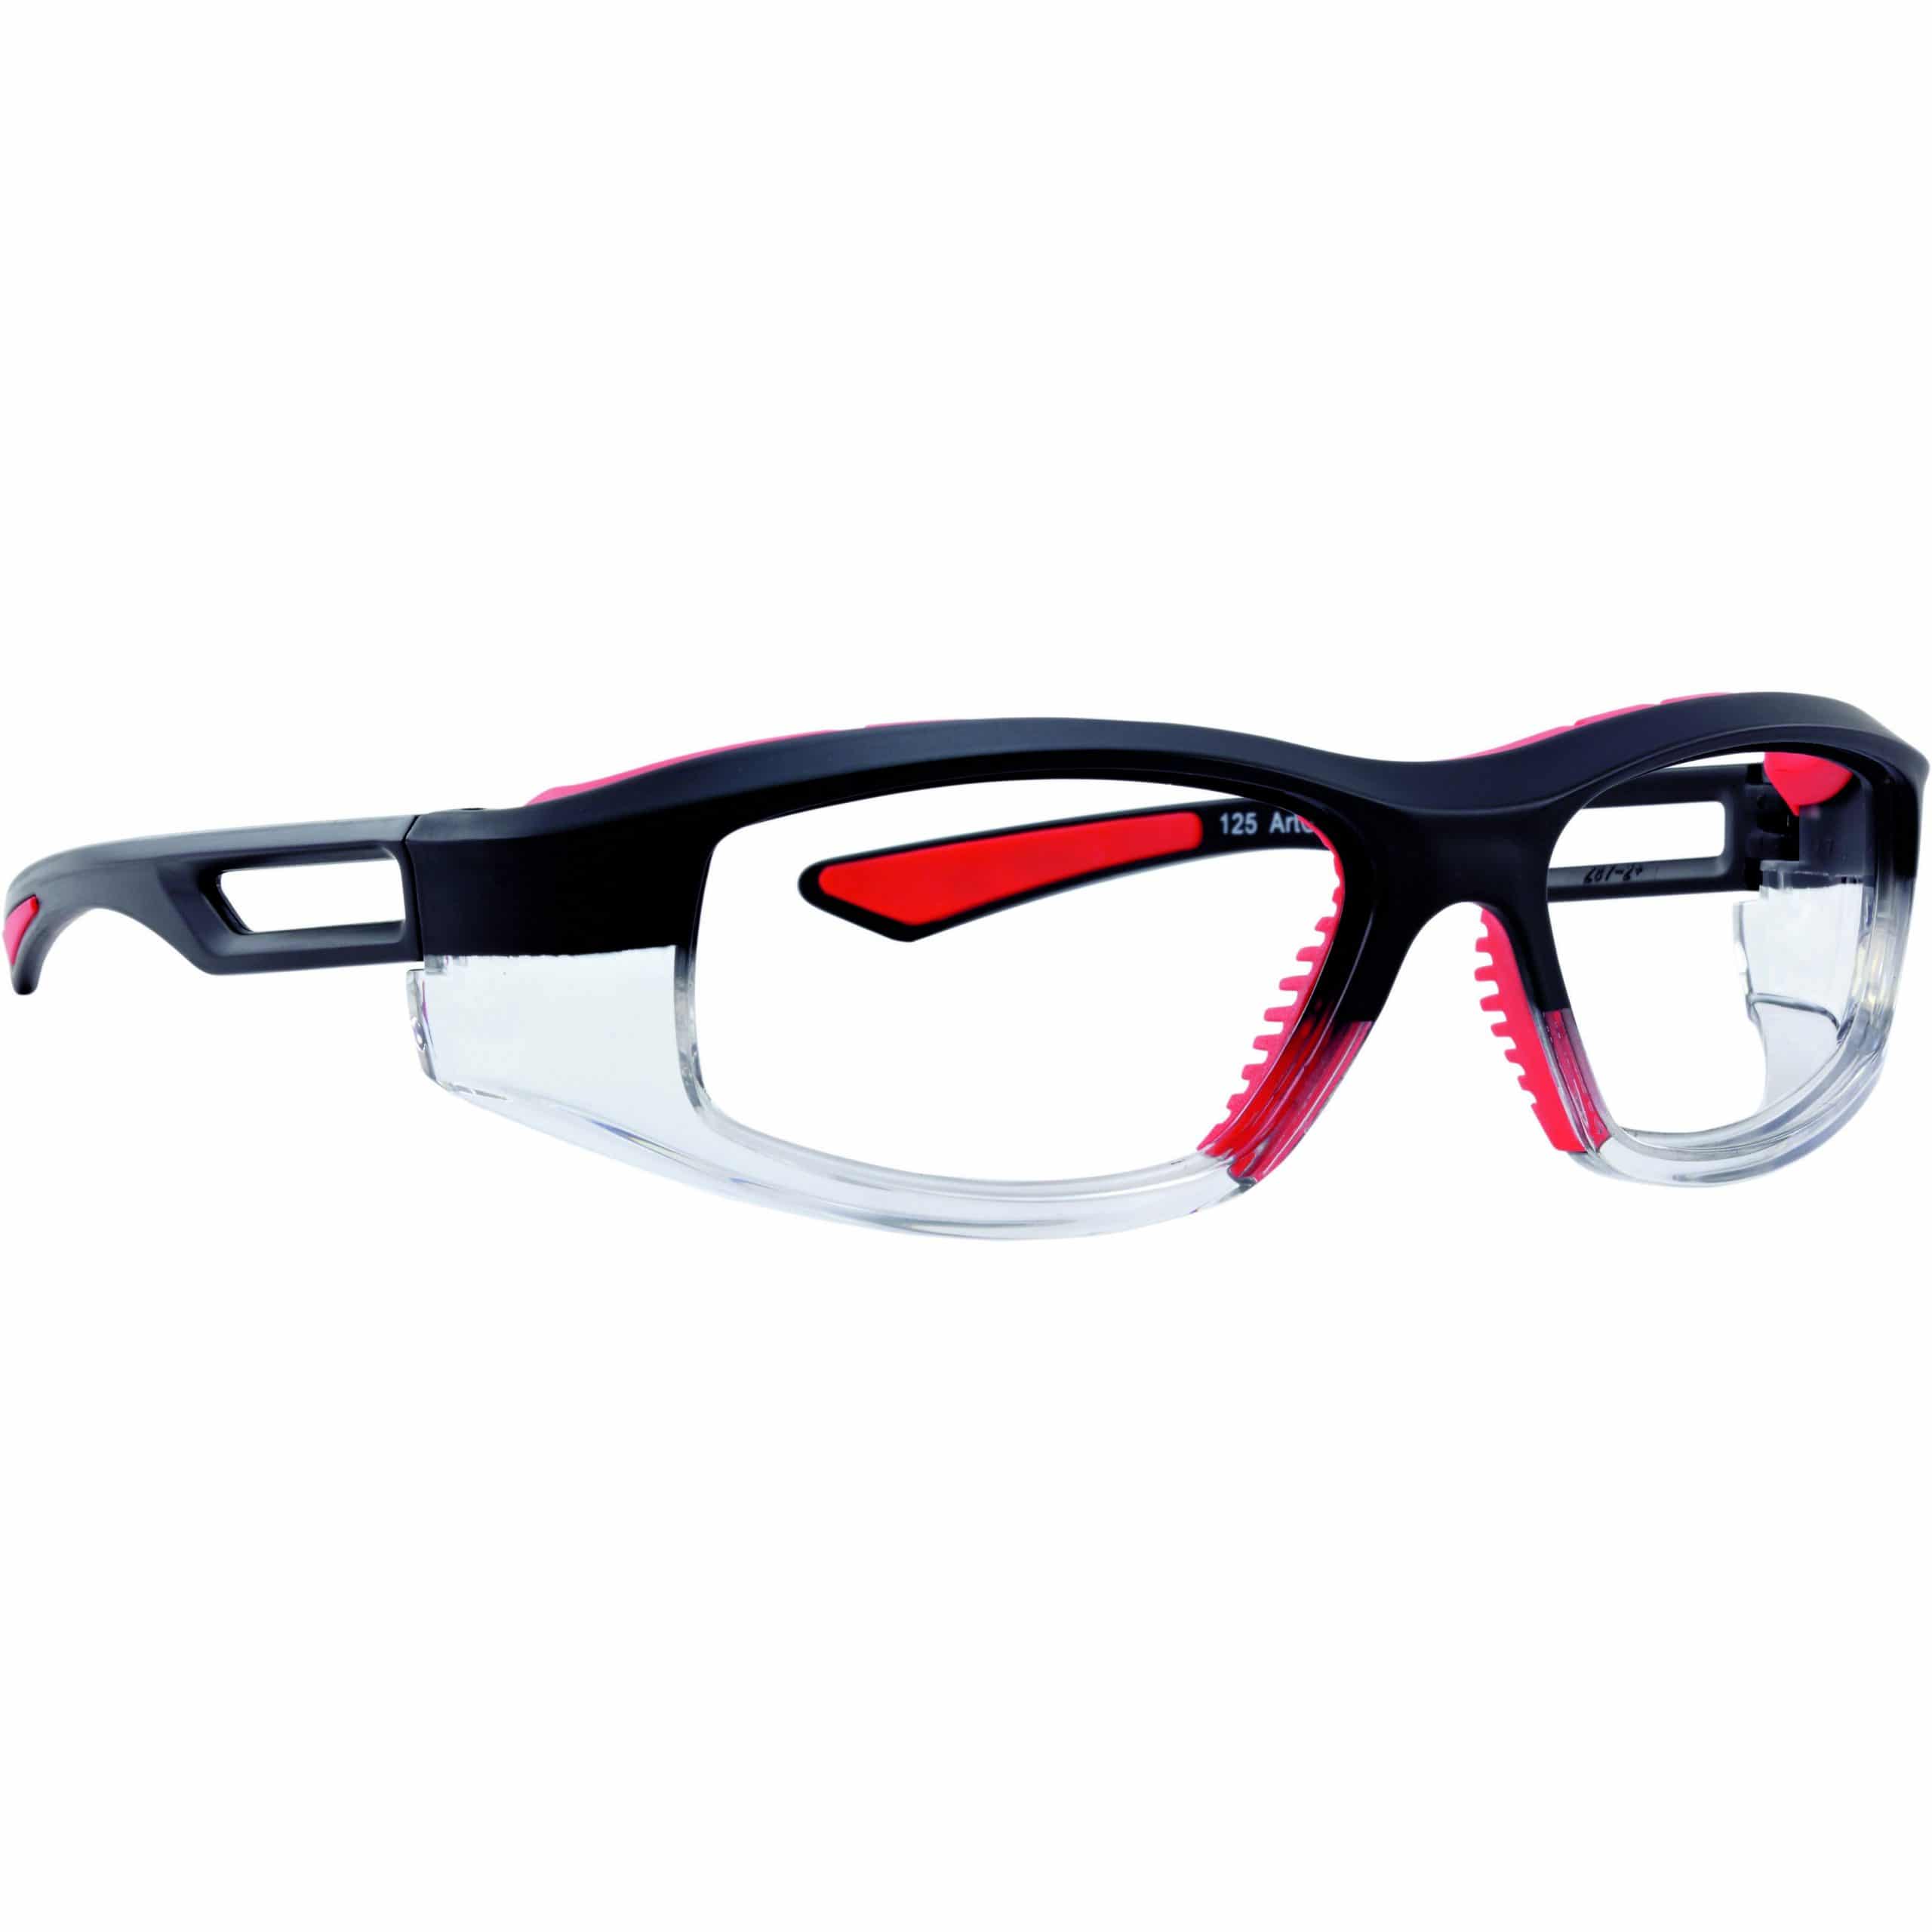 Art Craft Usa Workforce 970 Eyeglasses Safety Protection Glasses